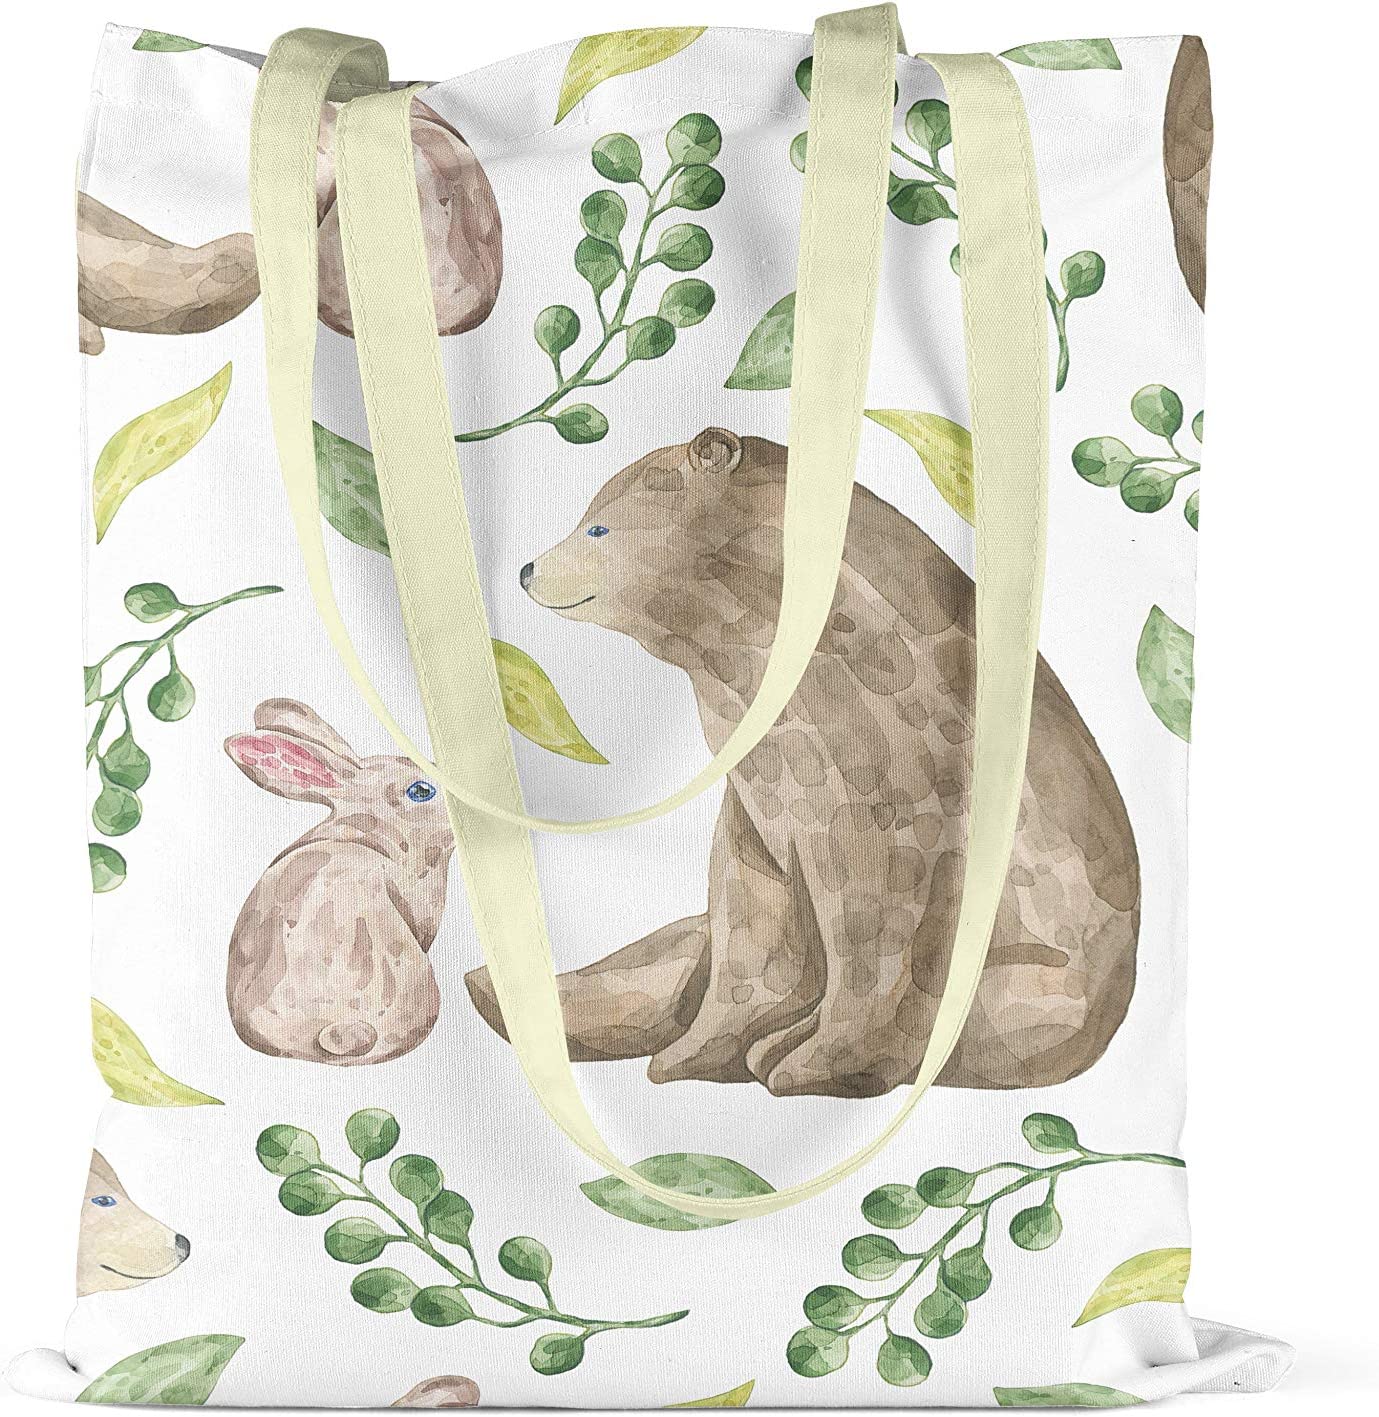 Bonamaison Animal & Floral Design Printed Cream Tote Bag 34 x 40cm RRP 5.99 CLEARANCE XL 3.99